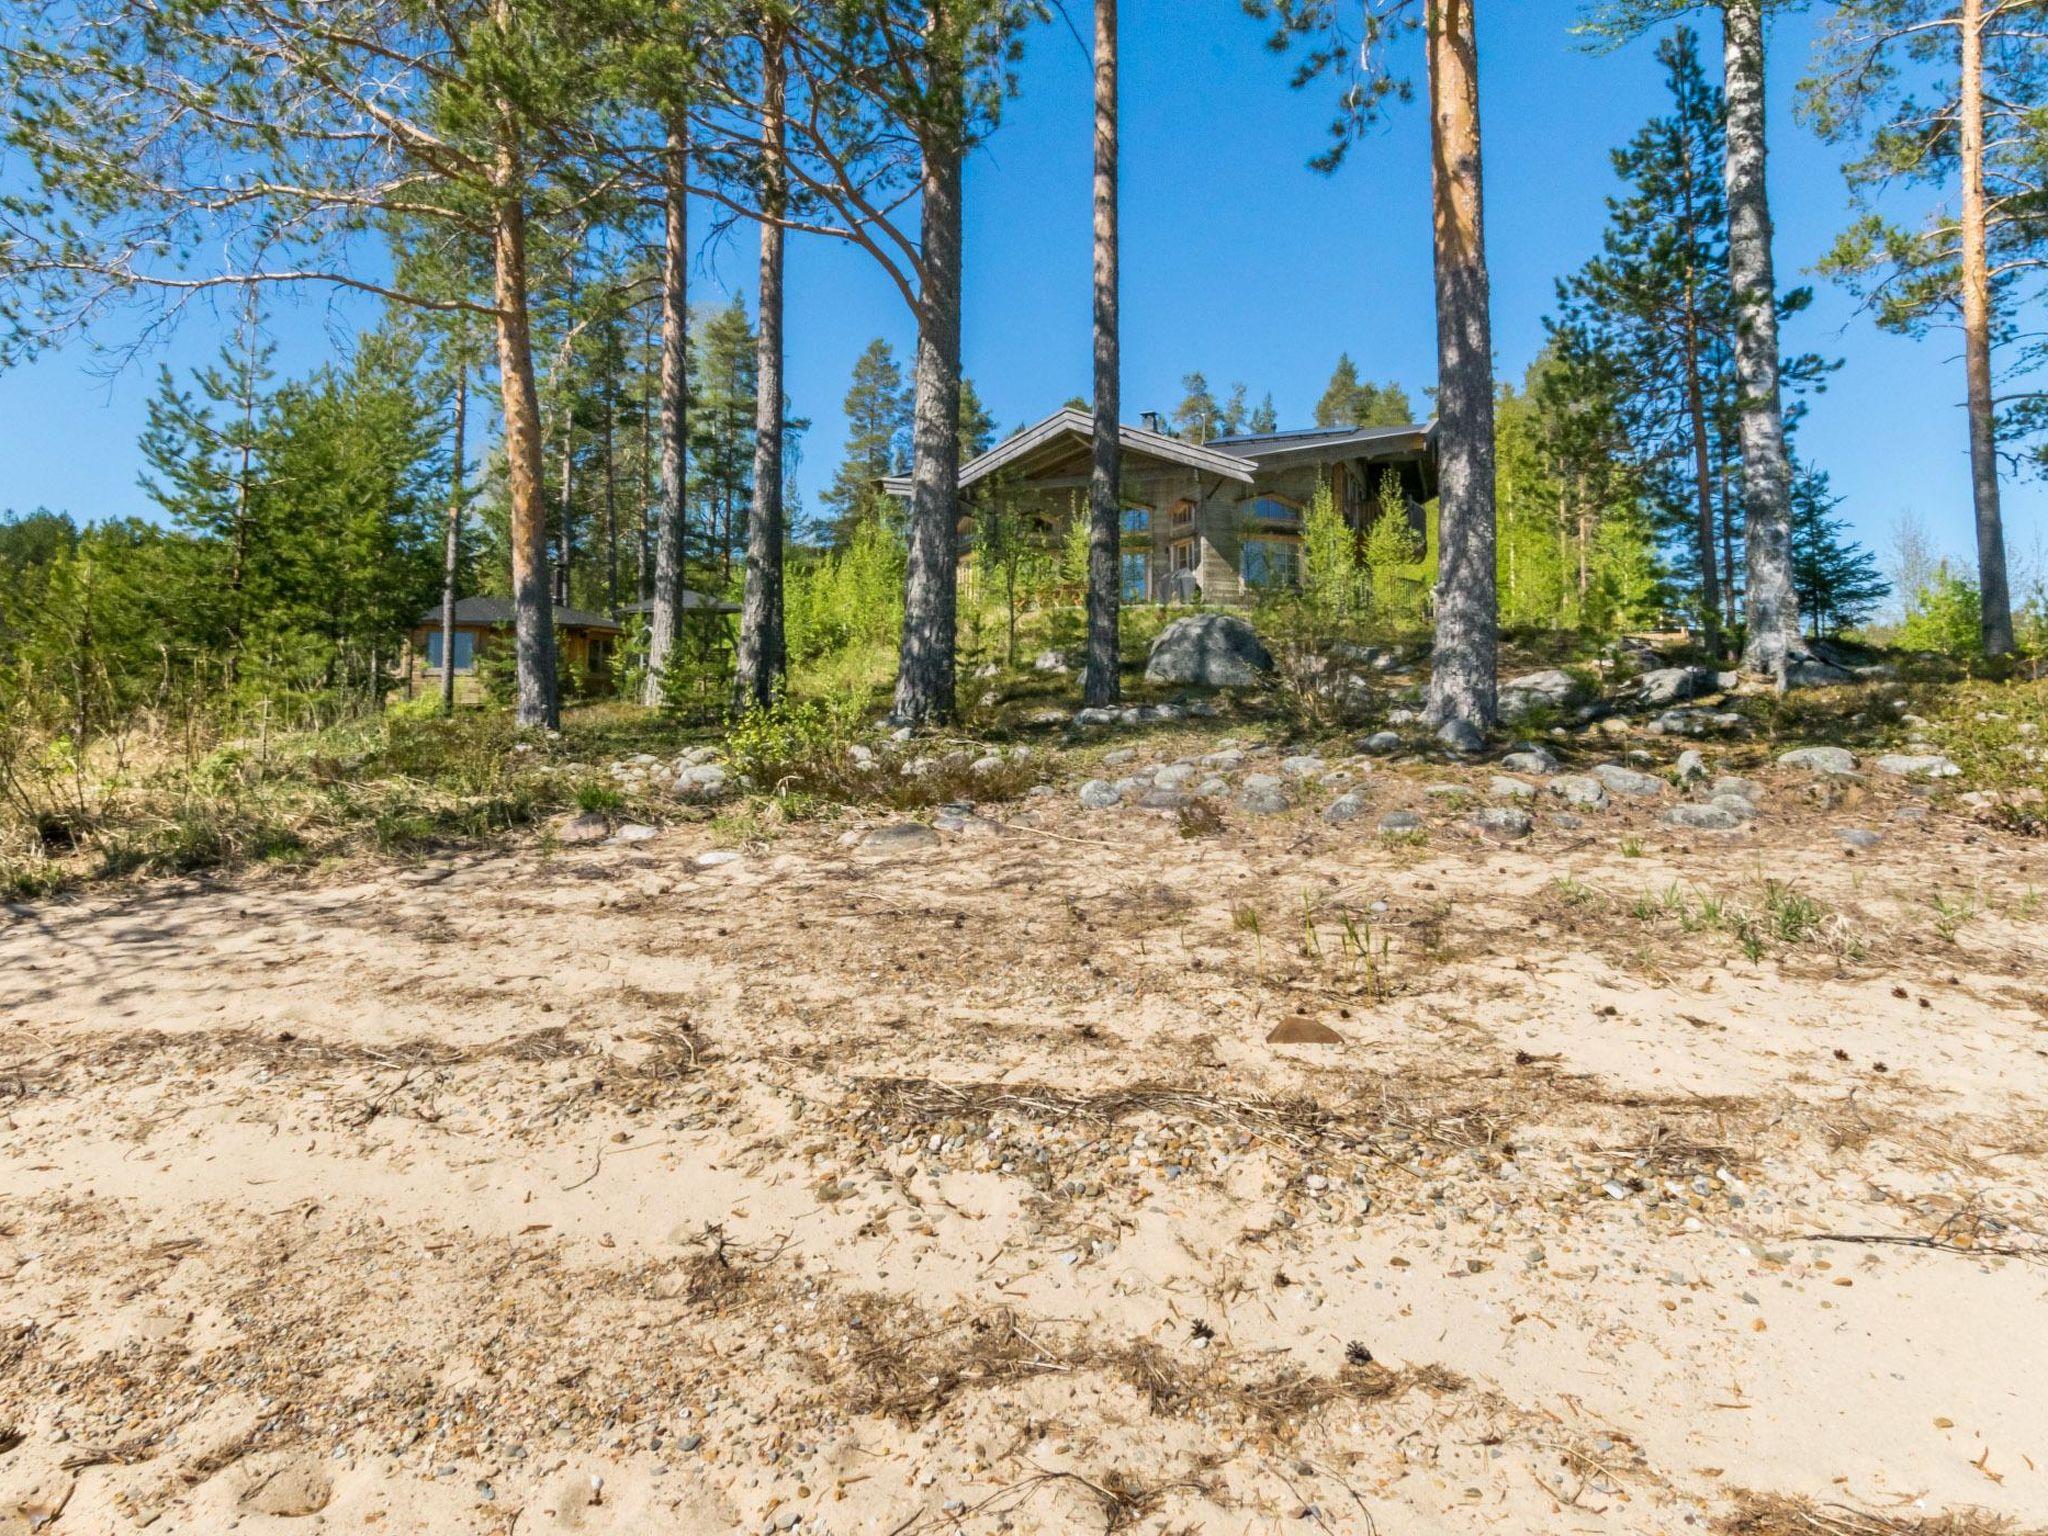 Photo 9 - 4 bedroom House in Savonlinna with sauna